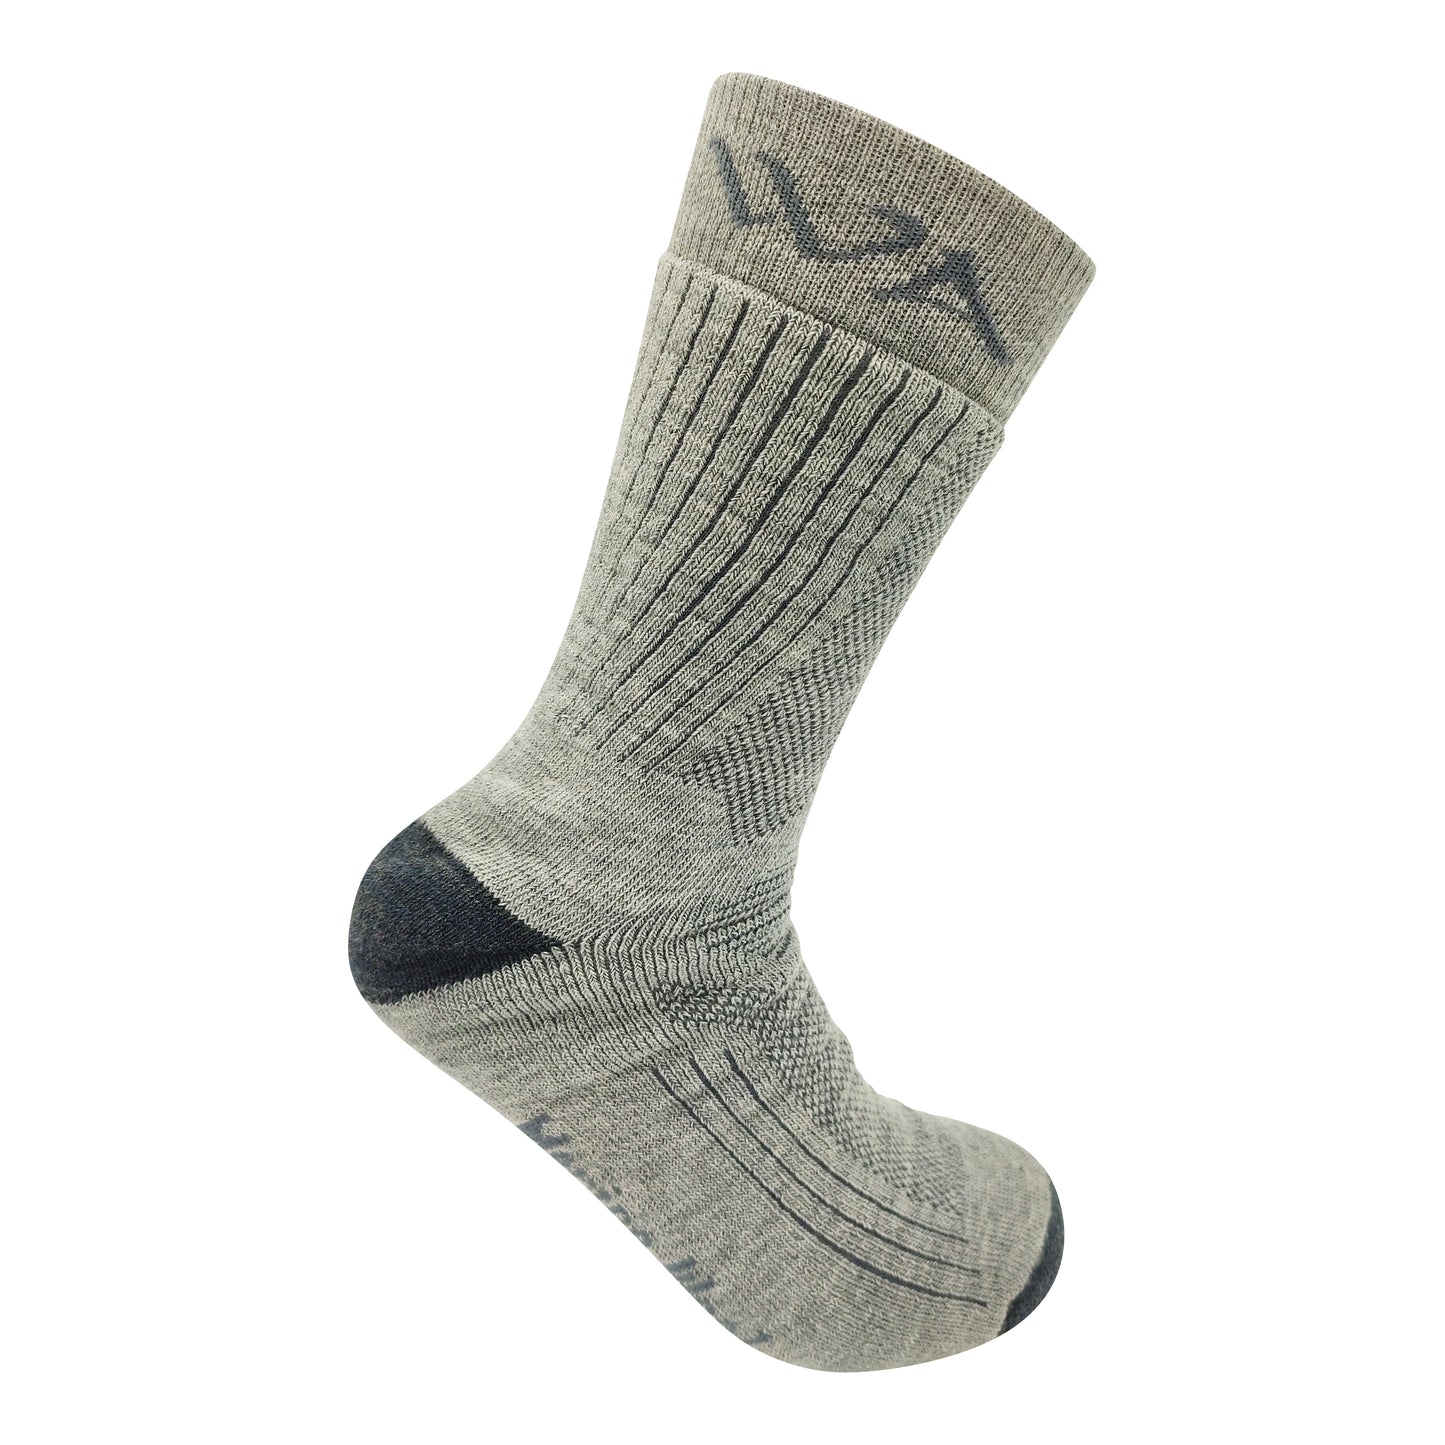 Arctic - Merino Wool Hiking Socks | (4 Pack) | Size UK 4 - 7